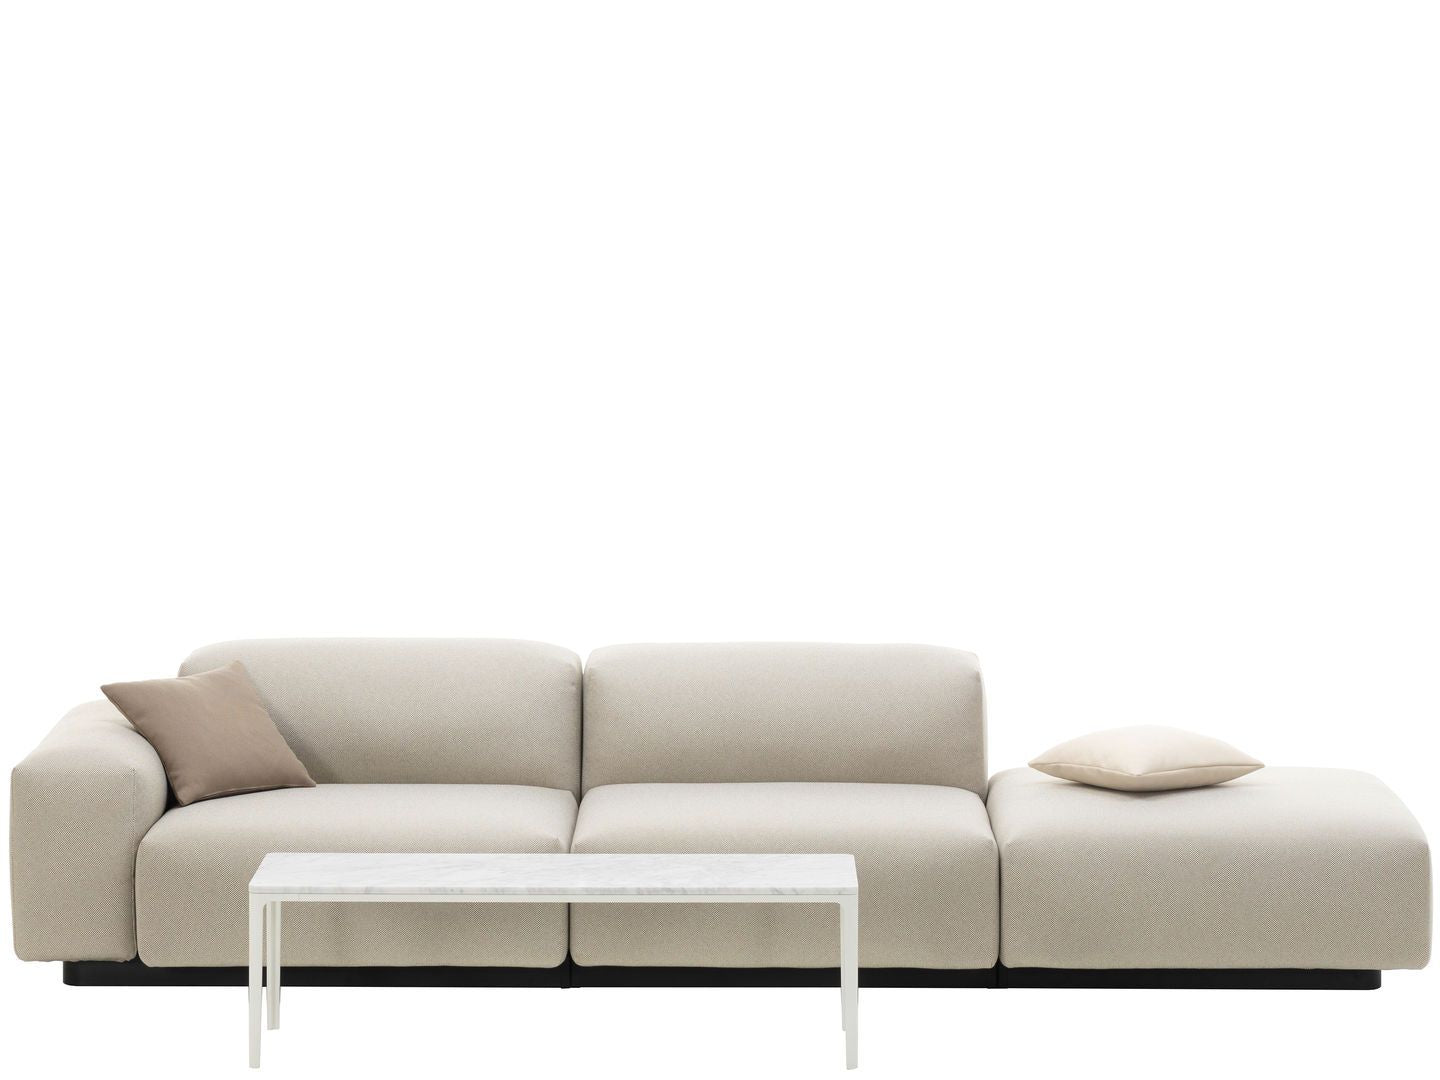 Alt Text: Vitra Soft Modular Sofa Three-seater, platform from One52 Furniture website